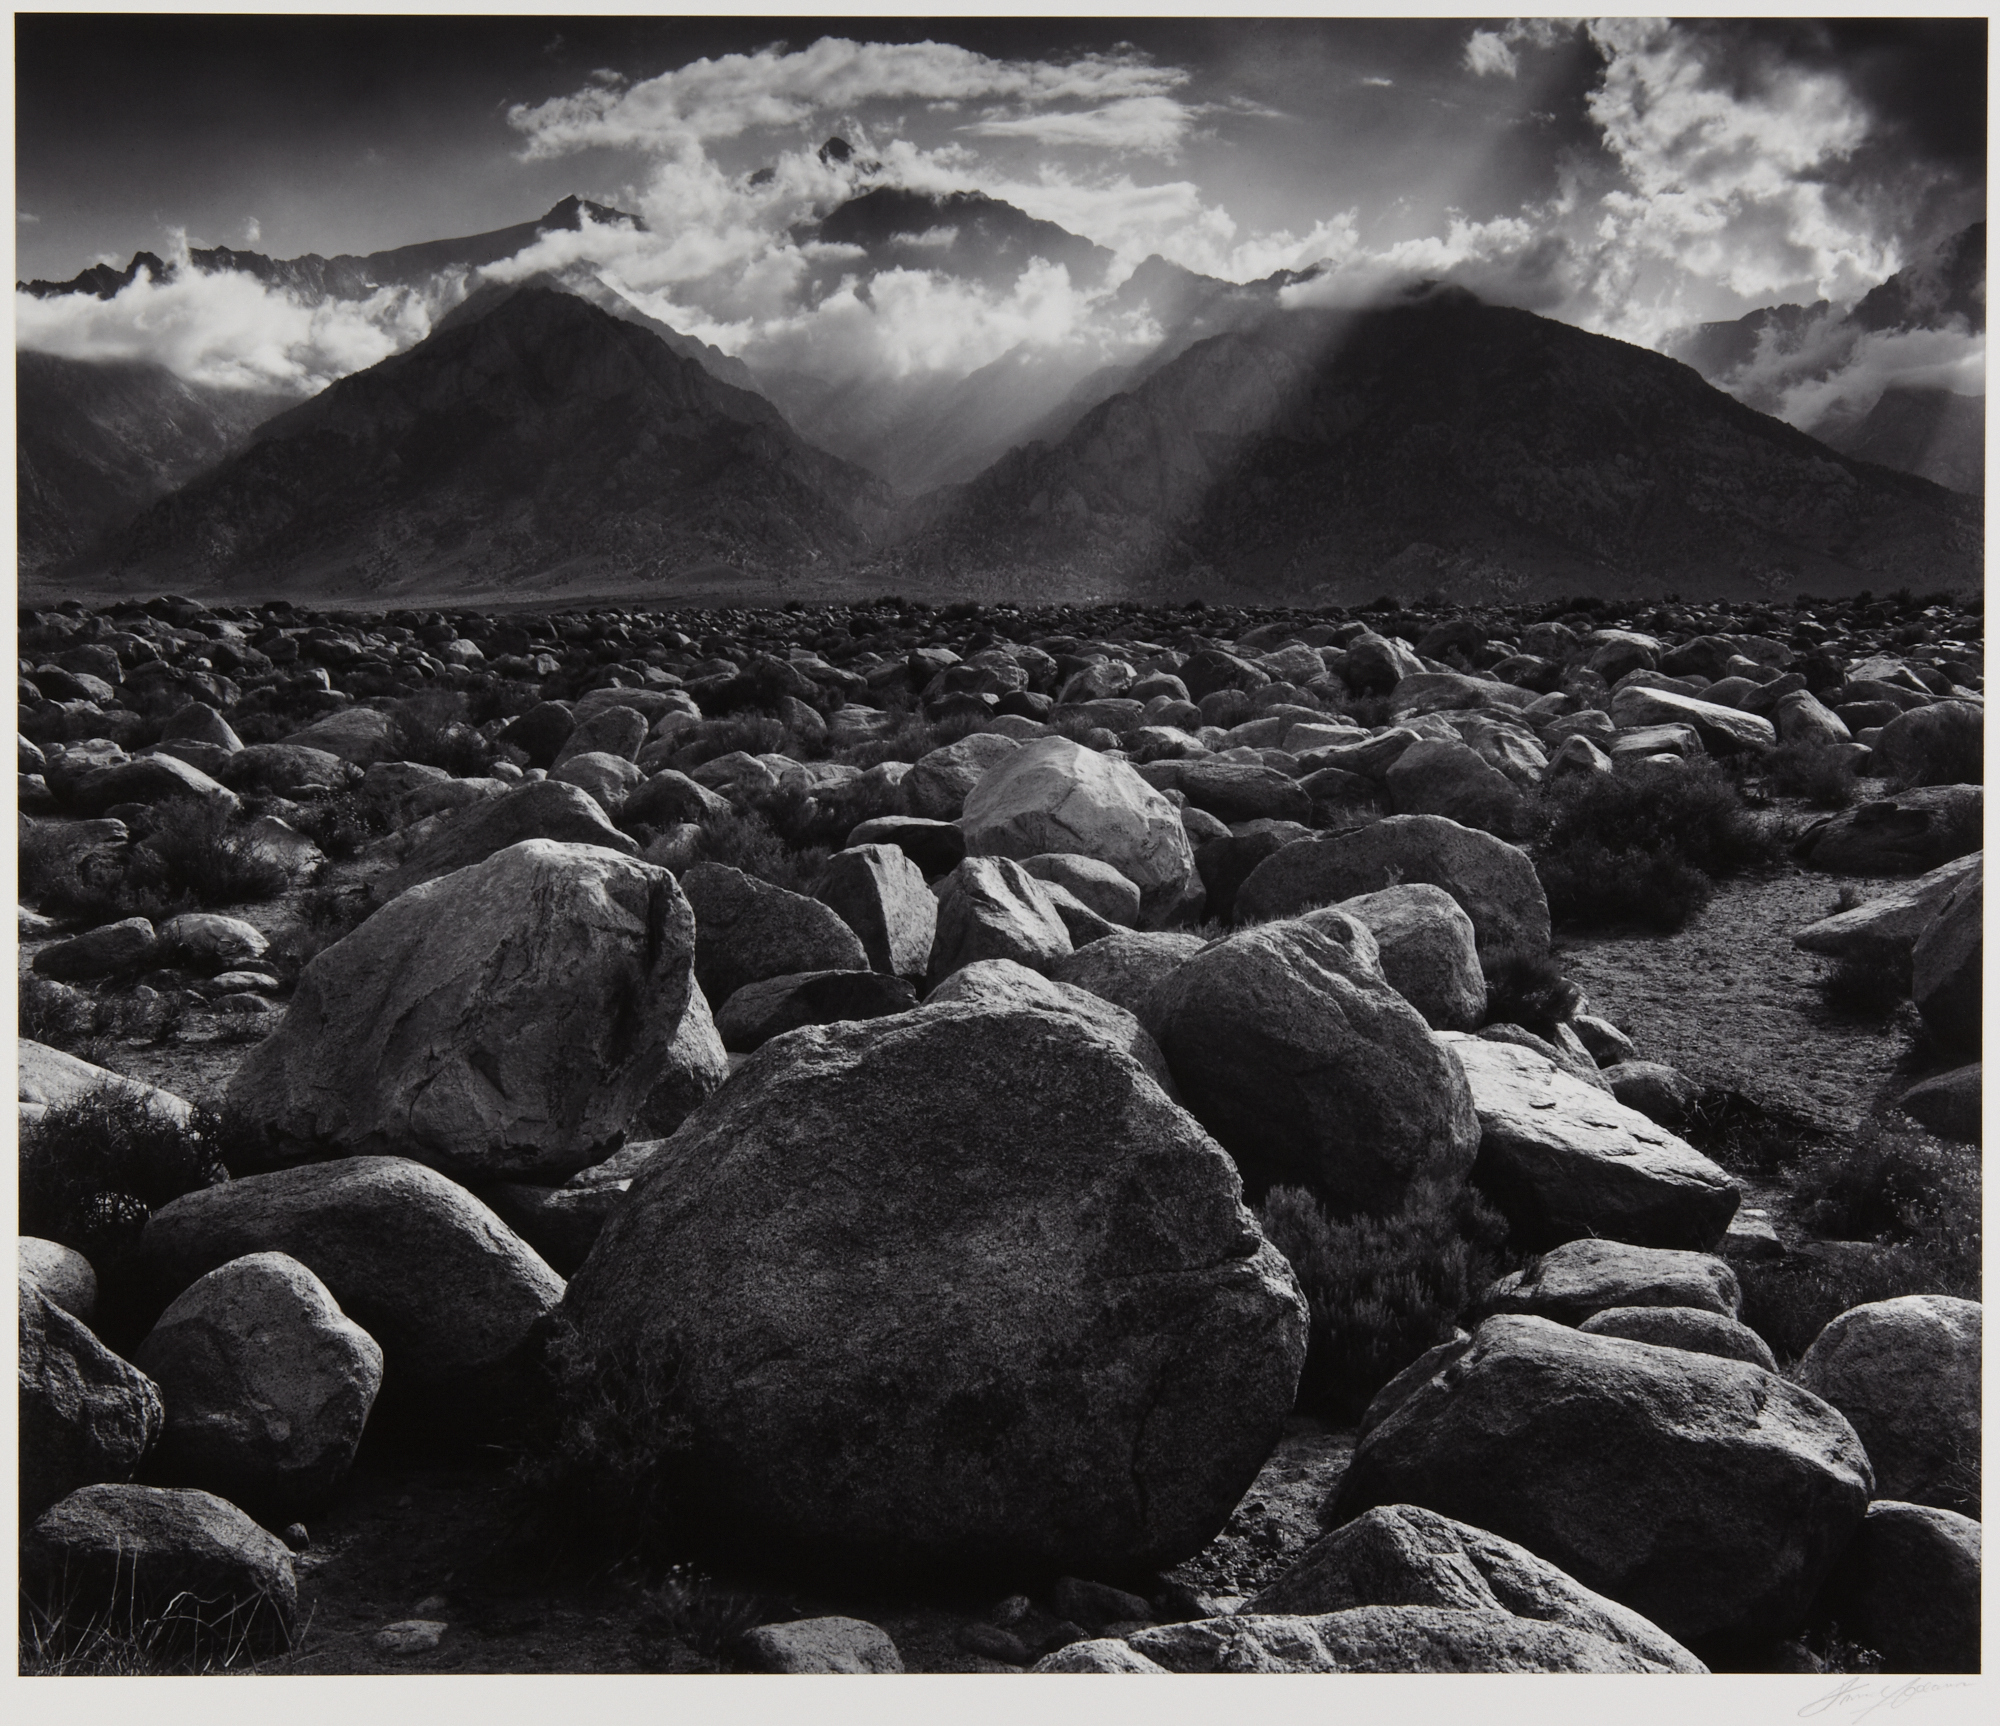 Photograph by Ansel Adams titled Mount Williamson, Sierra Nevada, from Manzanar, California, 1944, printed 1980.